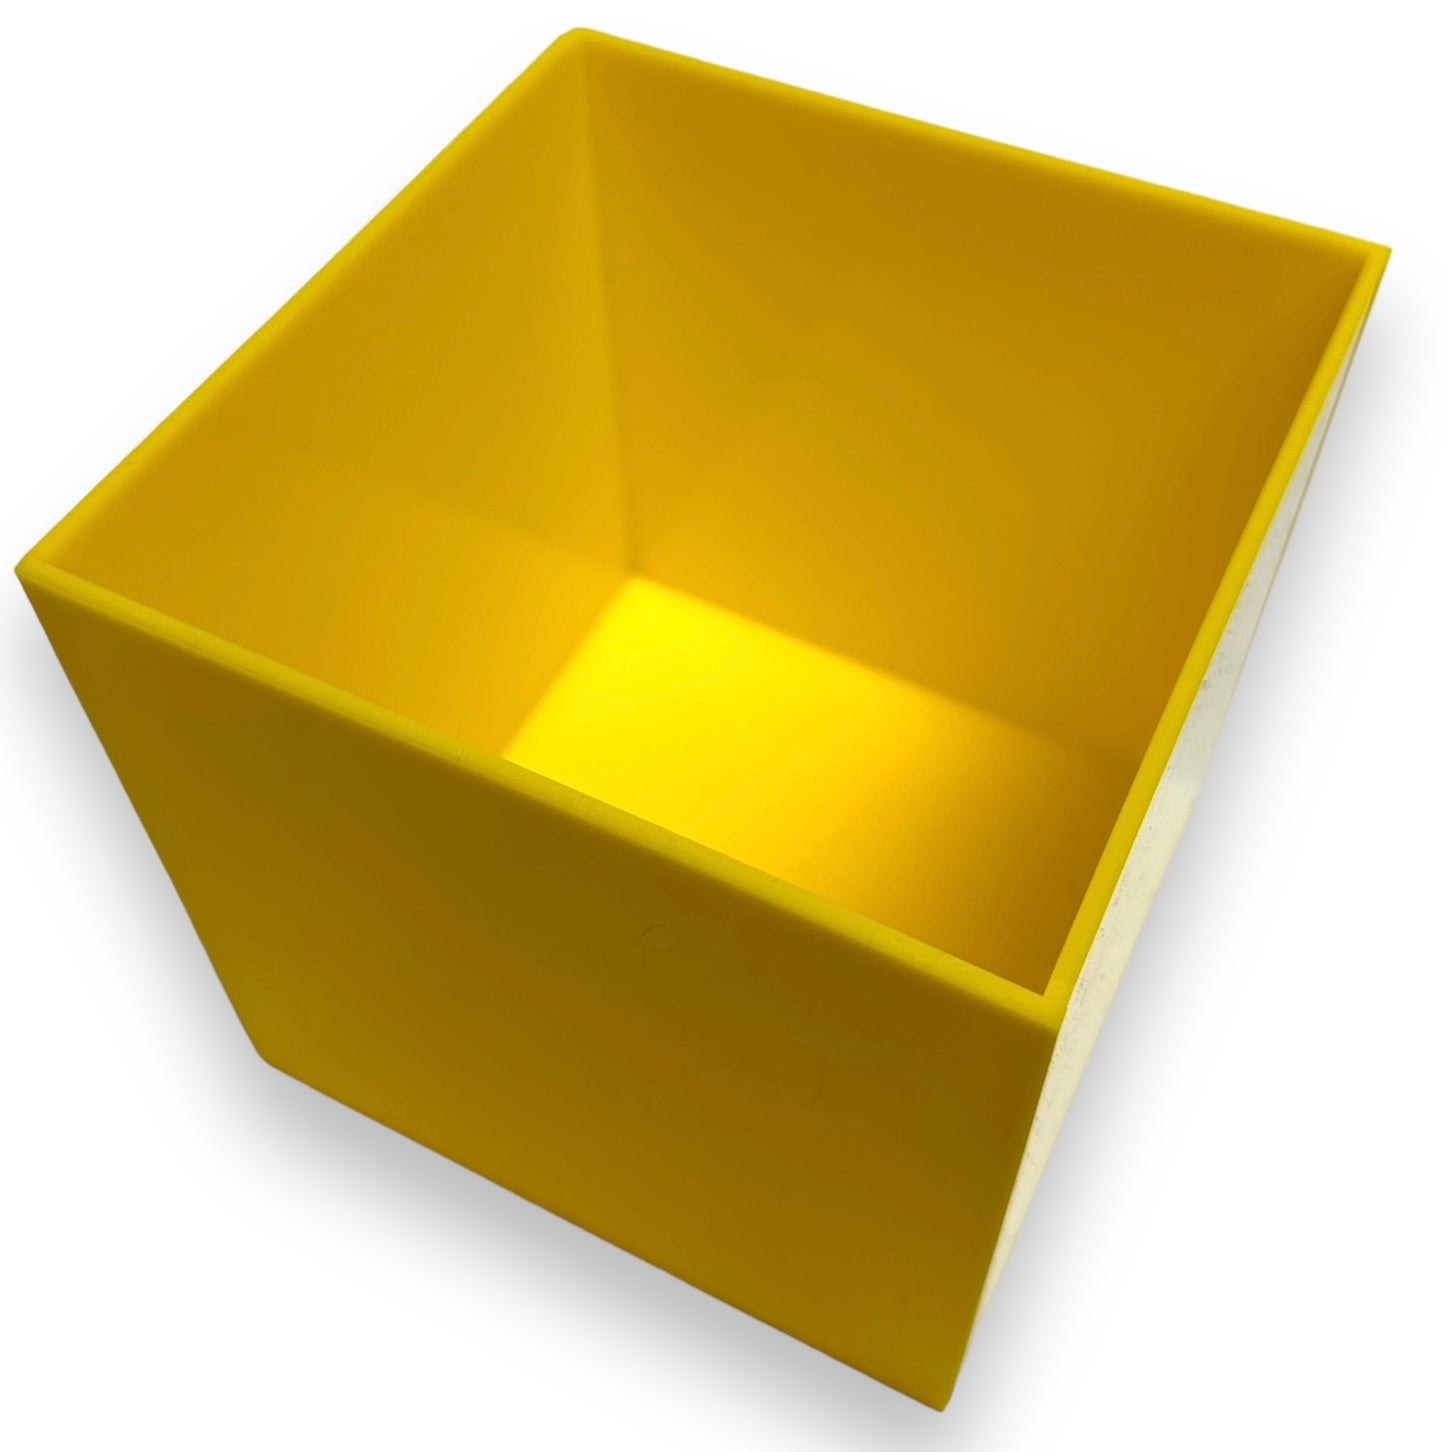 Yellow custom made 5 sided acrylic box